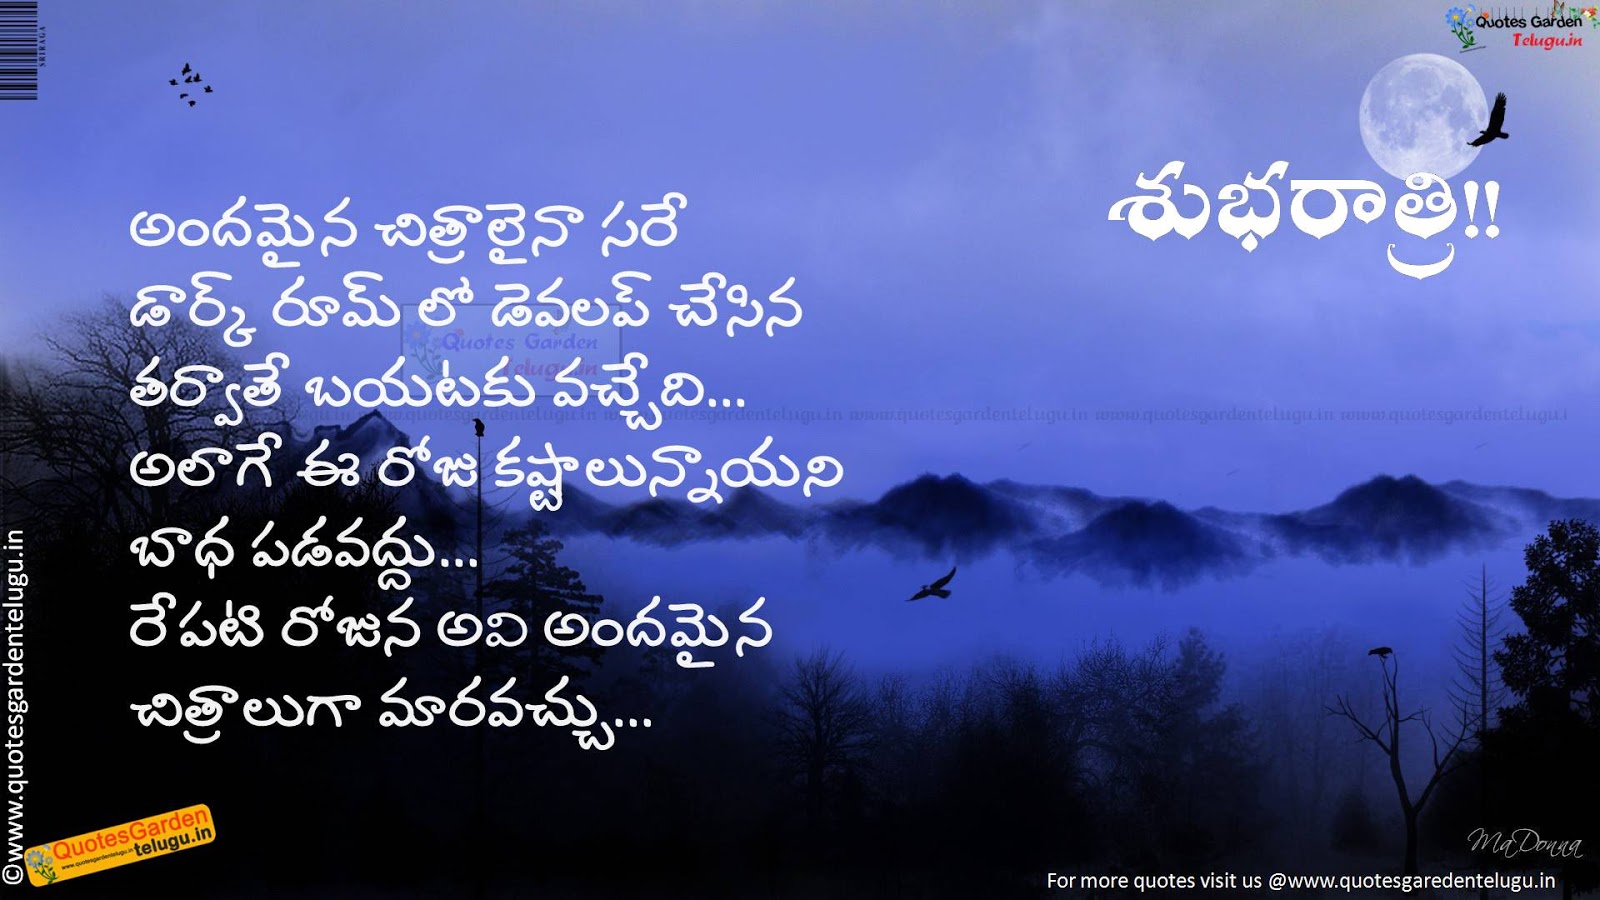 Heart Touching Good Night Telugu Quotes Quotes Garden Telugu